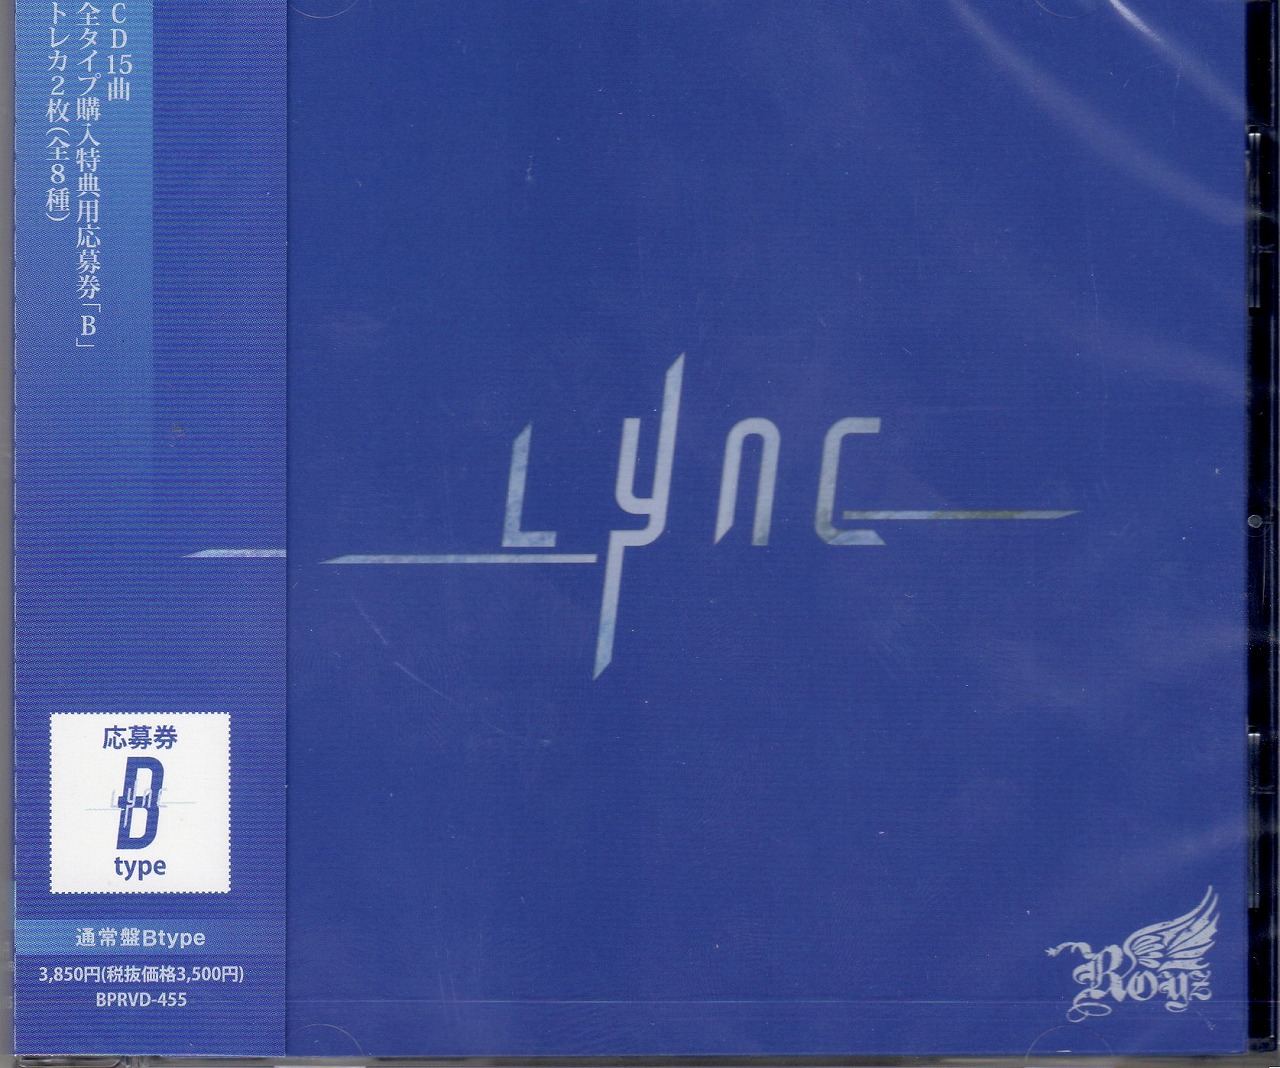 Royz ( ロイズ )  の CD 【Btype】Lync